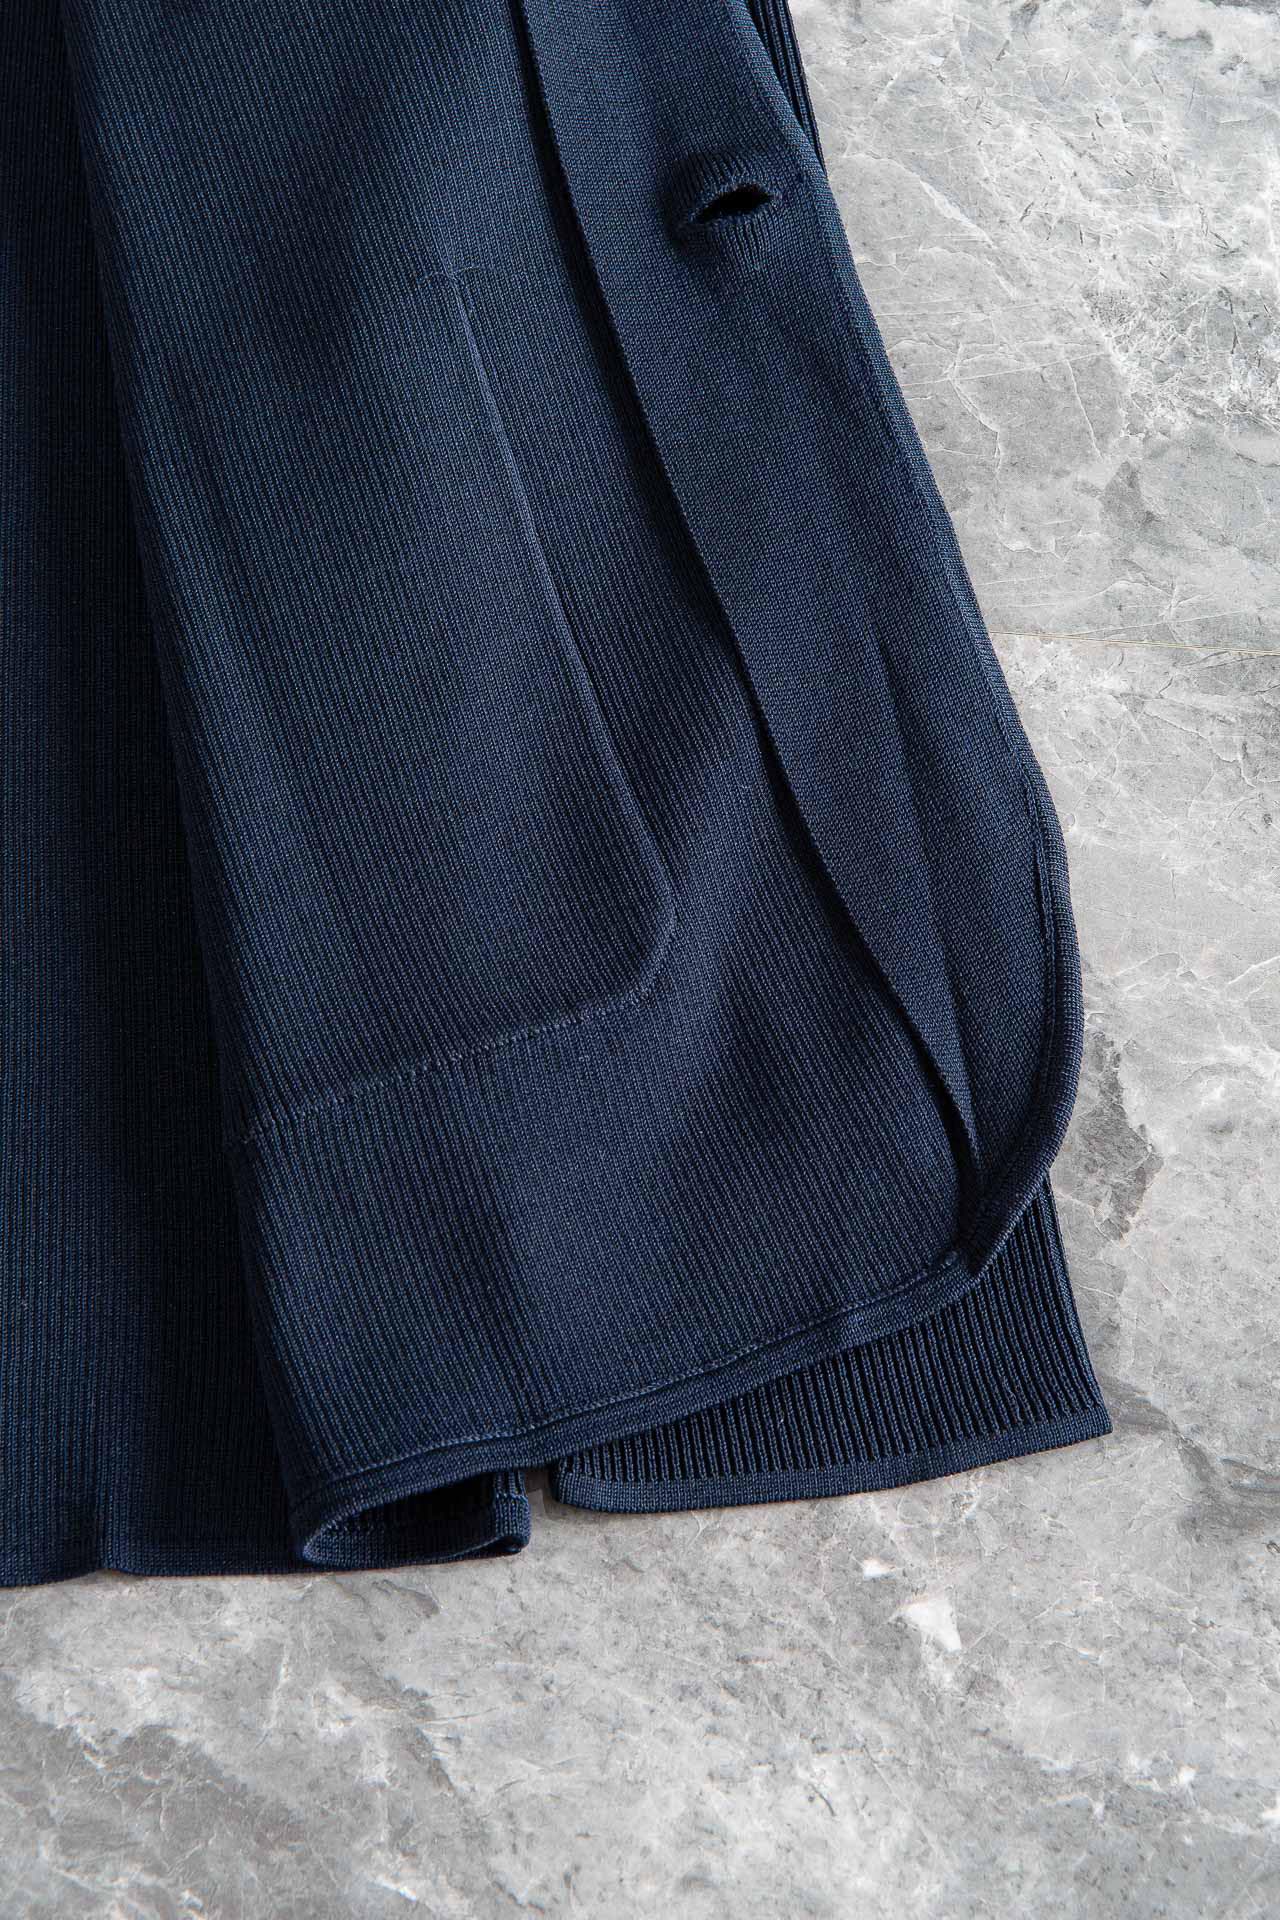 New#杰尼亚Zegna意式休闲西装!是一款时尚而舒适的产品让您在各种场合中都能自信得体地展现风采这款西